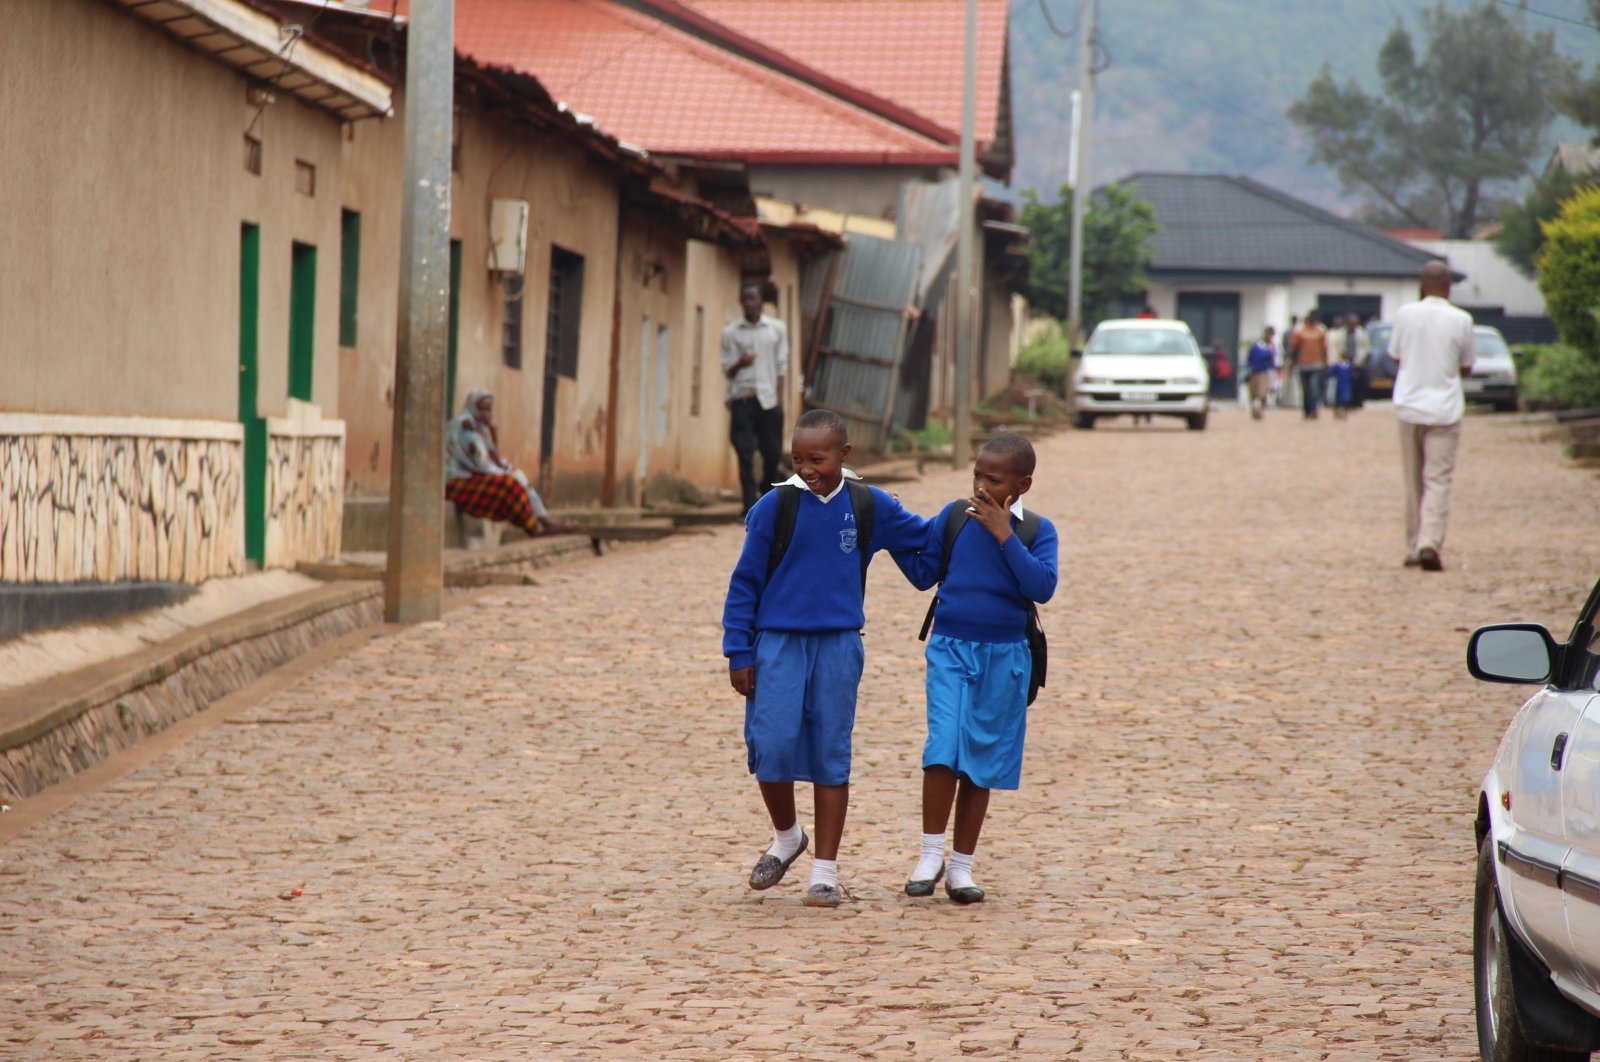 Two young school girls in uniform walk on their way home after class, in Kigali, Rwanda, July, 2016. (Shutterstock Photo)